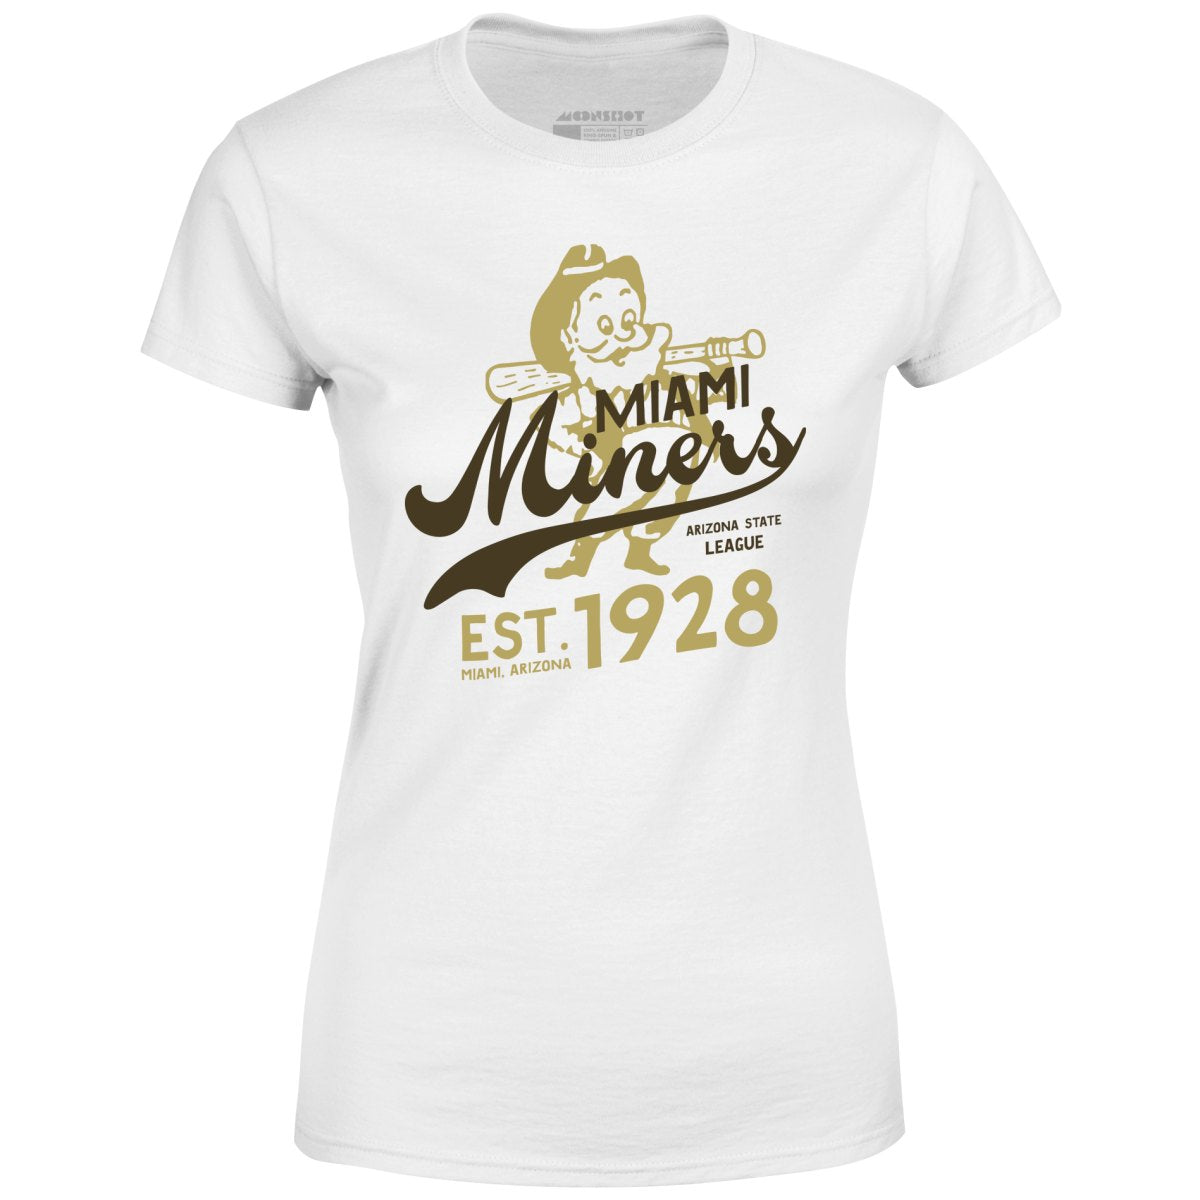 Miami Miners - Arizona - Vintage Defunct Baseball Teams - Women's T-Shirt